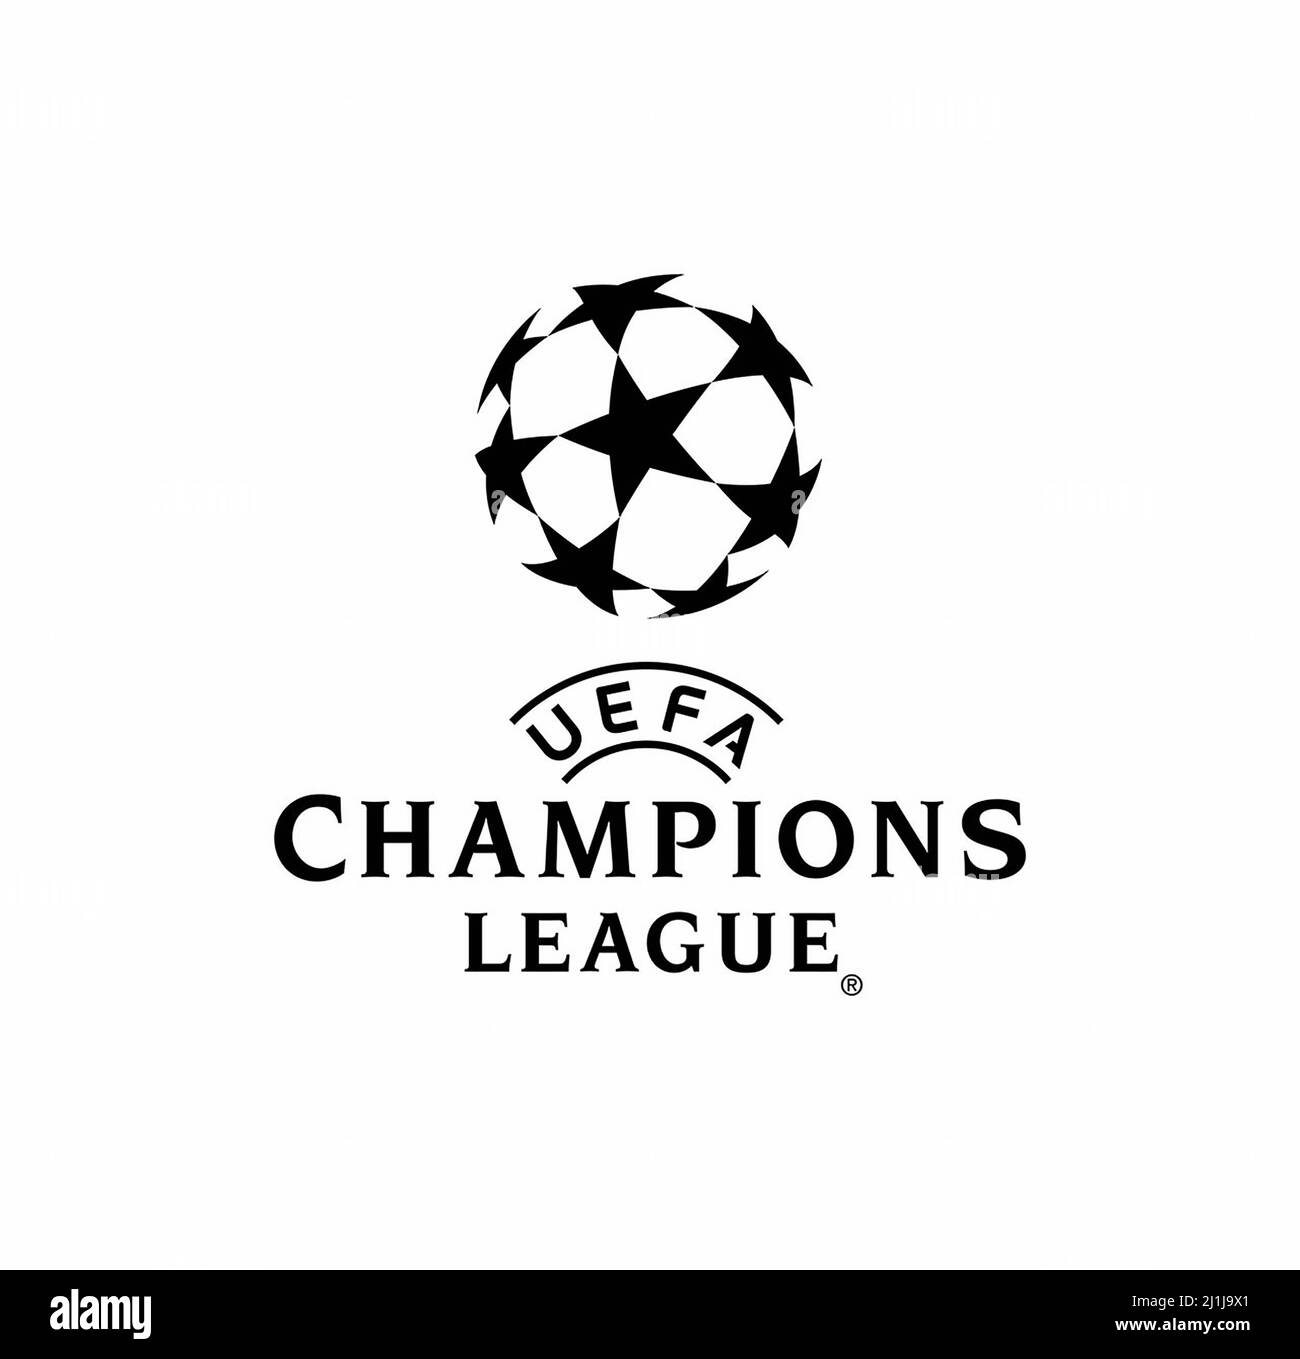 official UEFA Champions League logo Stock Photo